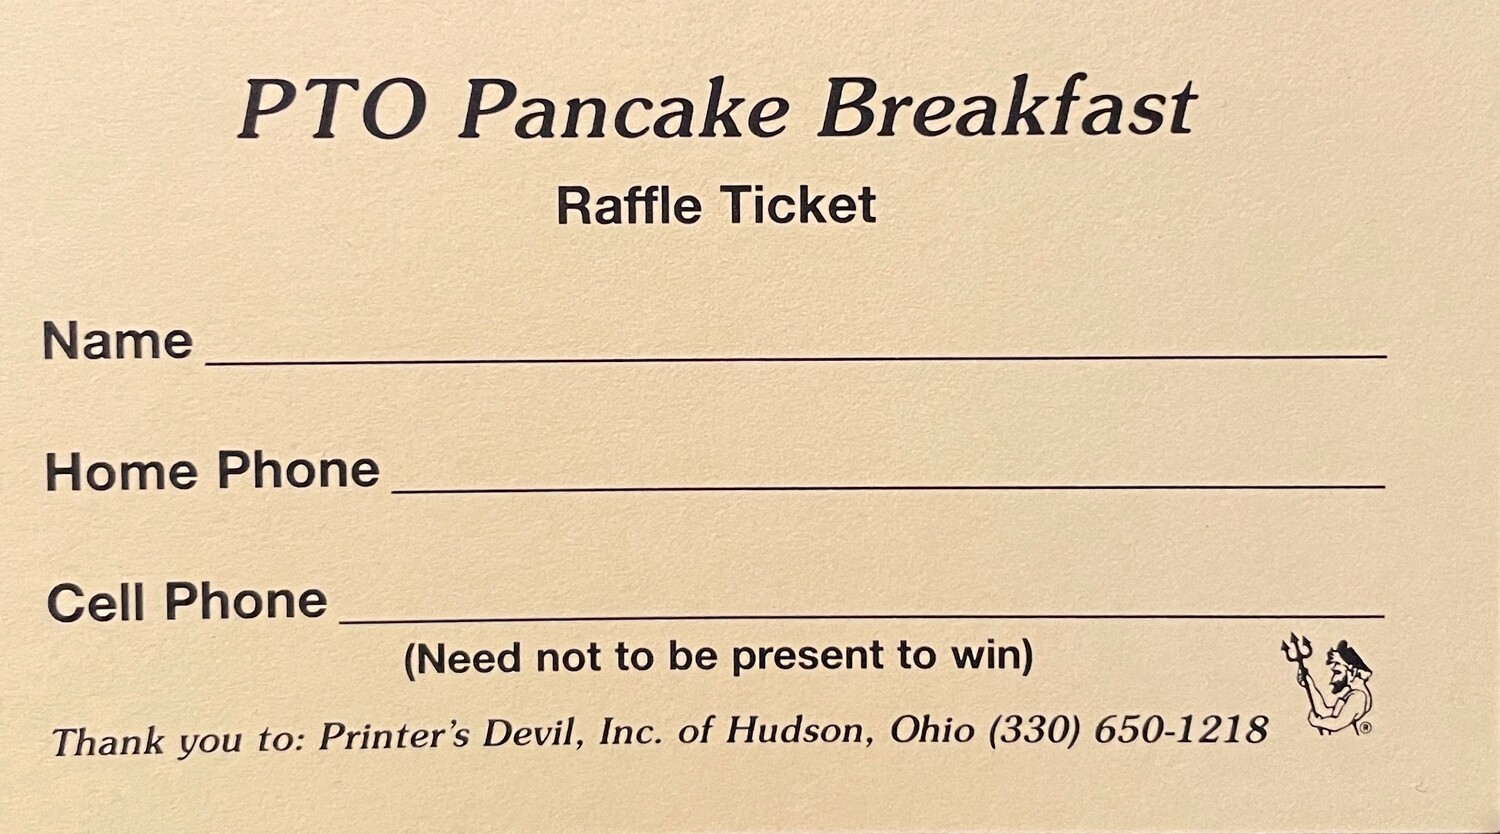 Pancake Breakfast: Pre-Sale Raffle Tickets, 1 pack of 15 tickets for $10